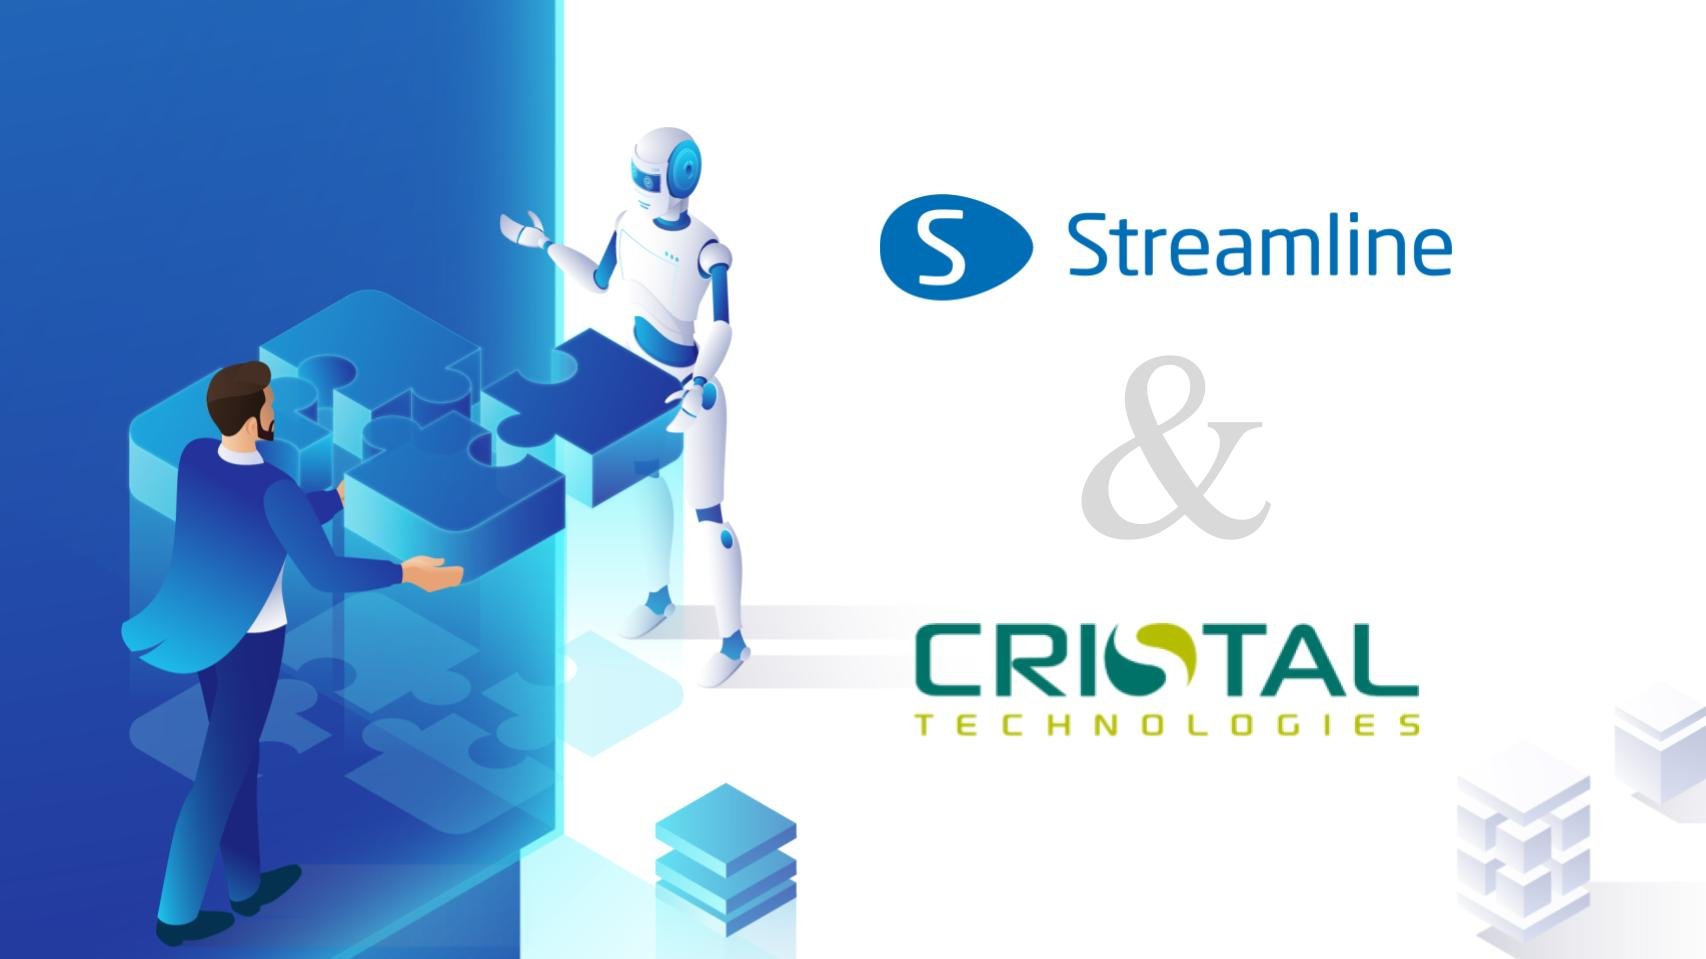 GMDH Streamline 和 Cristal Technologies 宣佈建立戰略合作夥伴關係